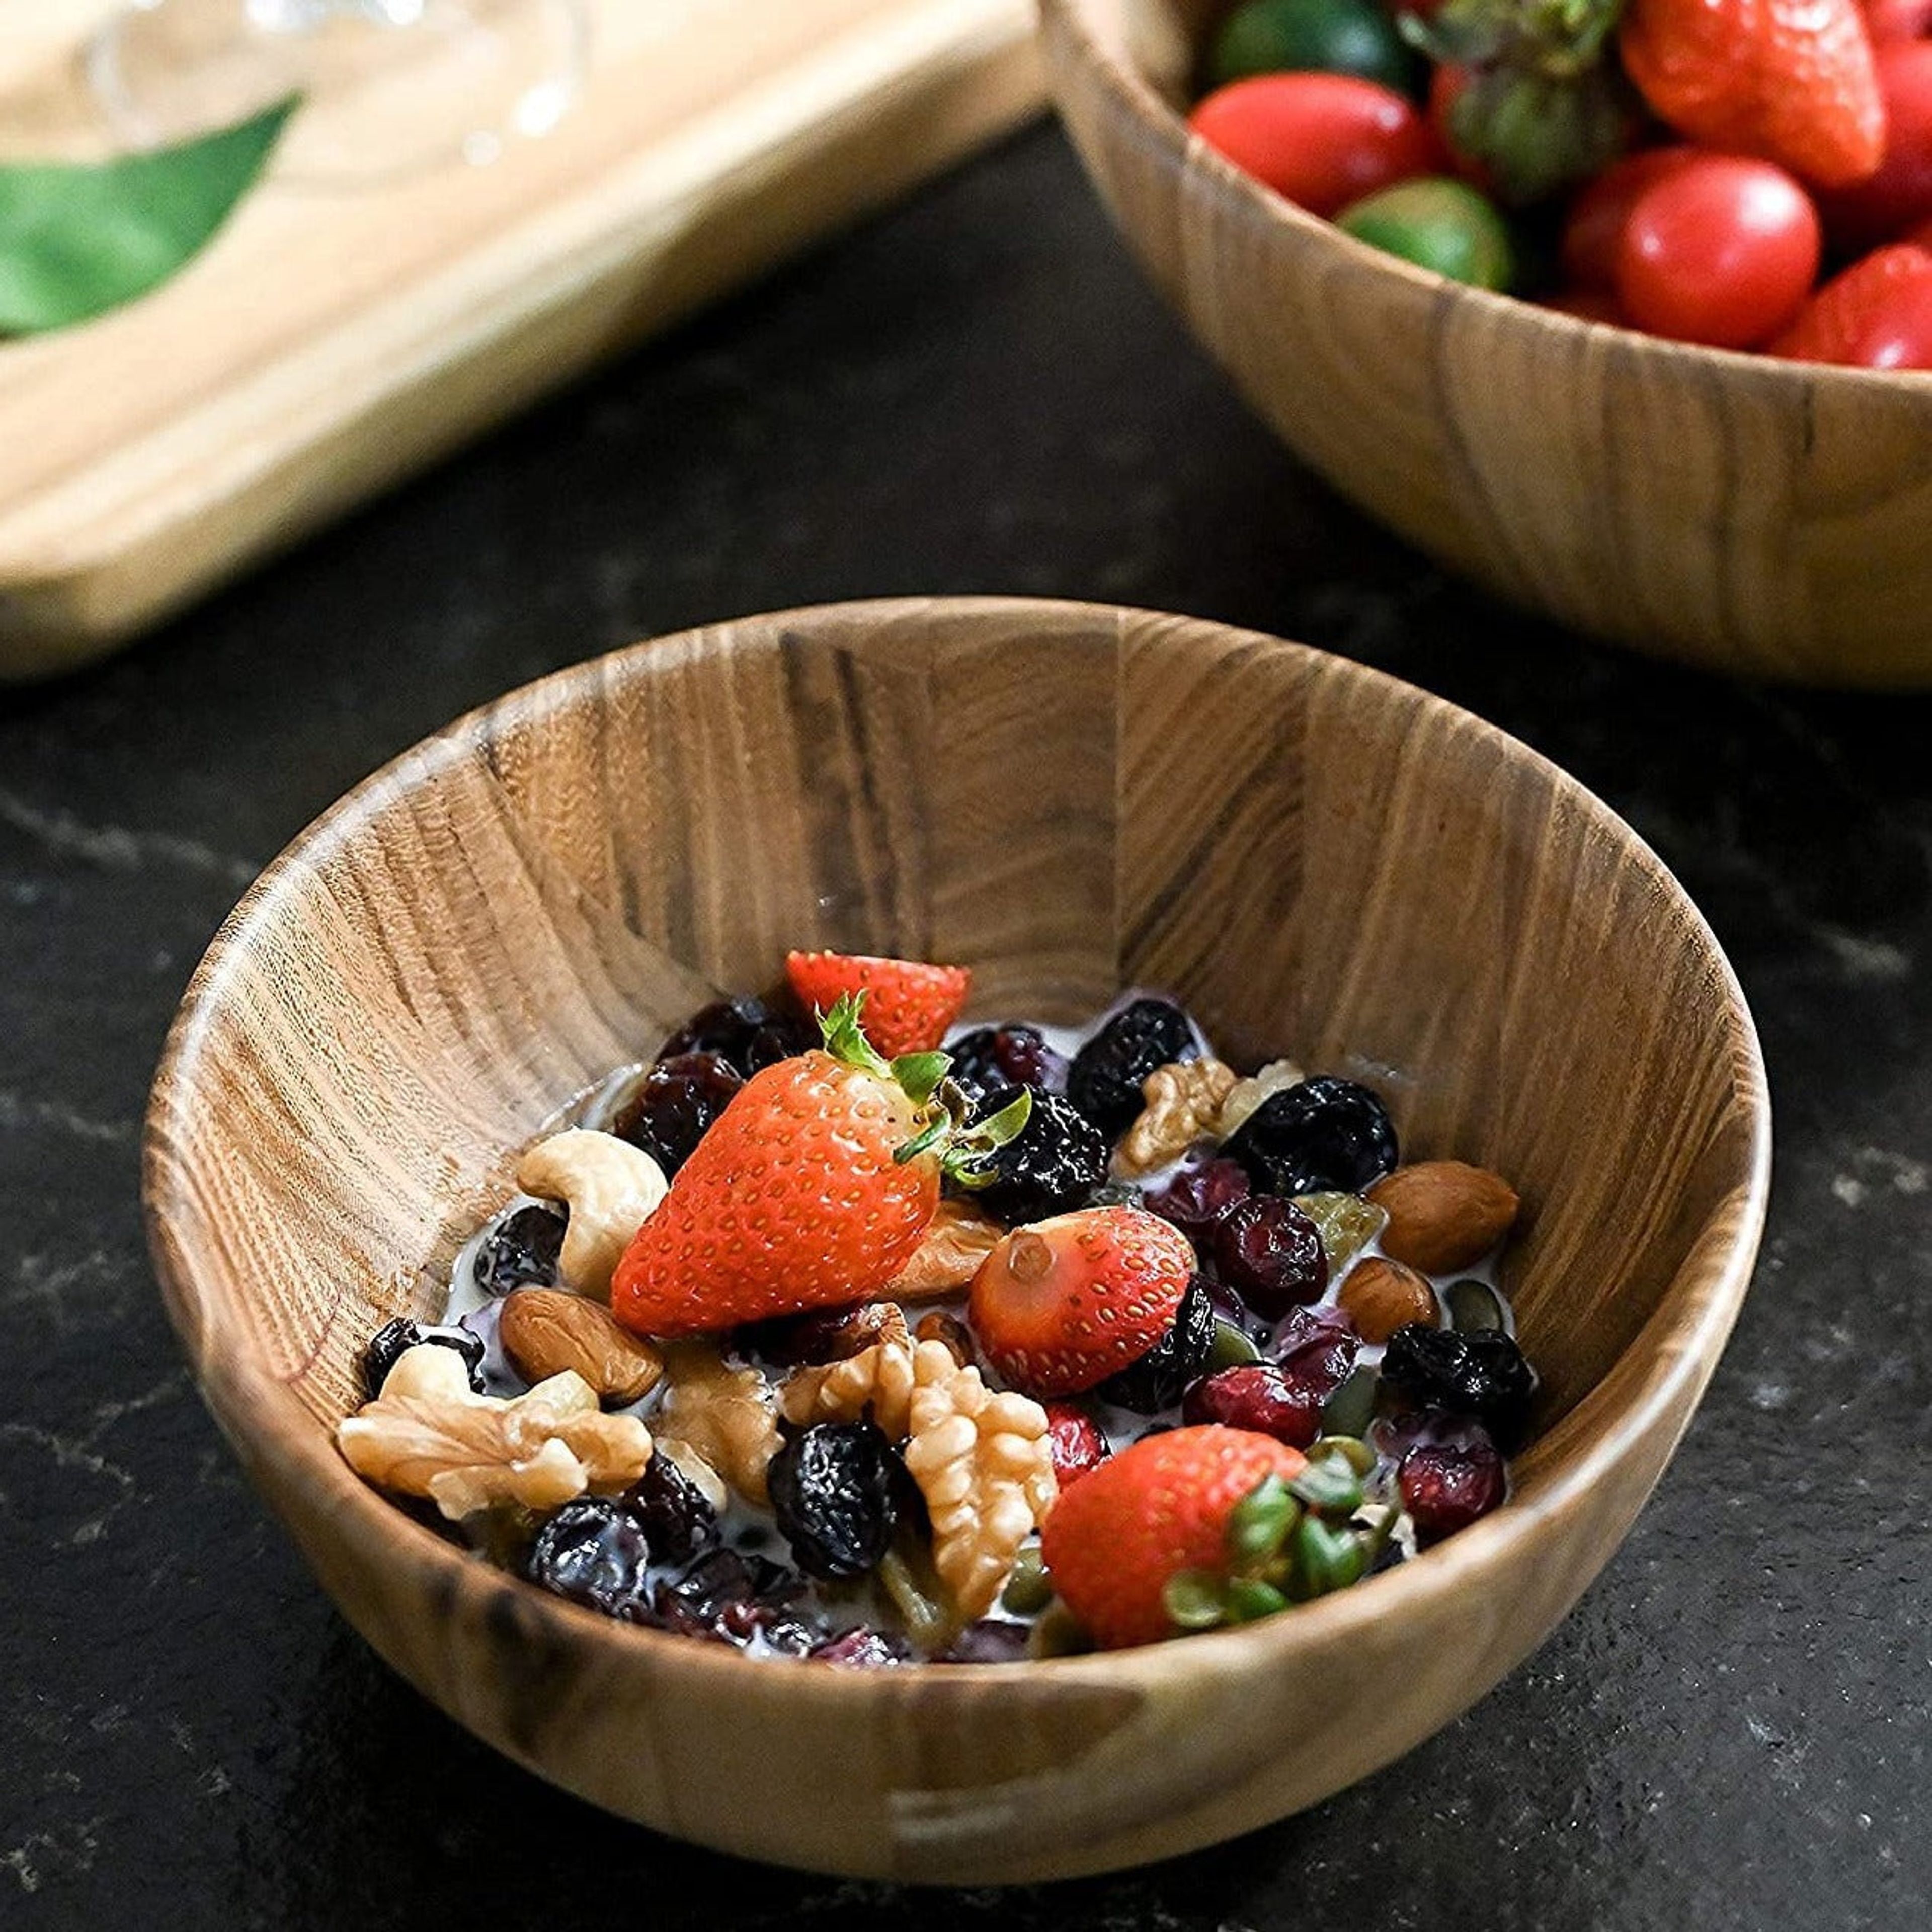 Buy 1 get 1 FREE - Teak Wood Natural Grain Bowl Serving Bowl for Fruit Salad, Single Bowl